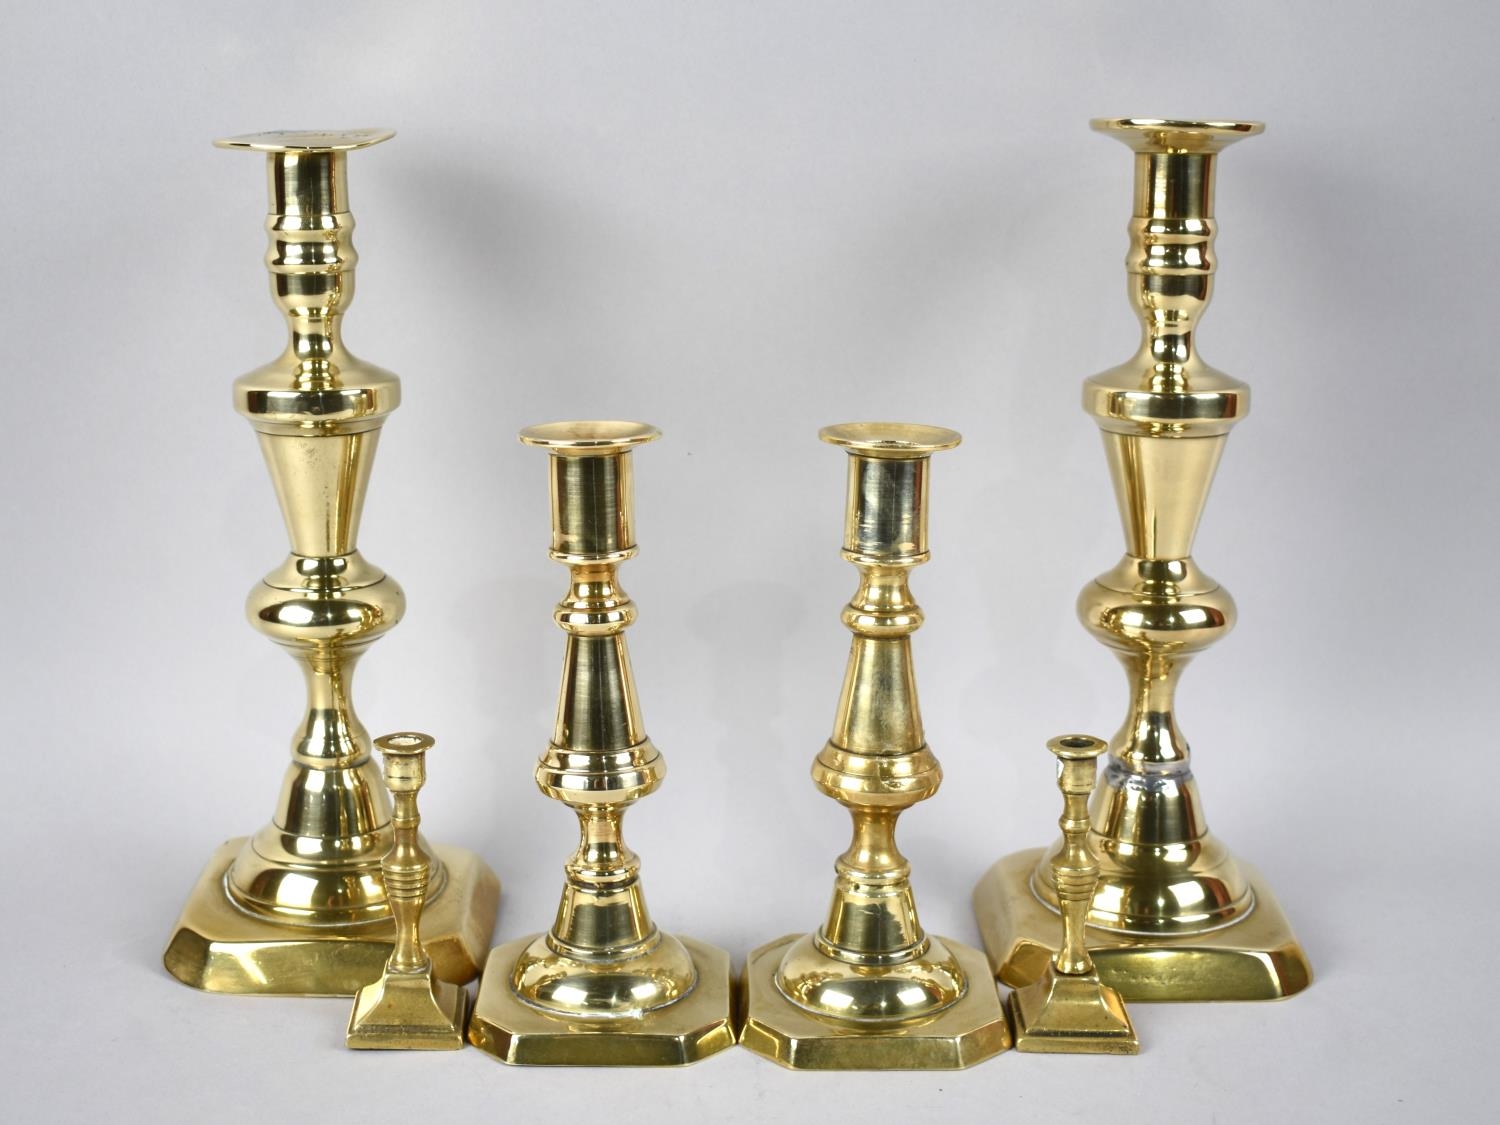 Three Pairs of Brass Candlesticks, Tallest 25cm High